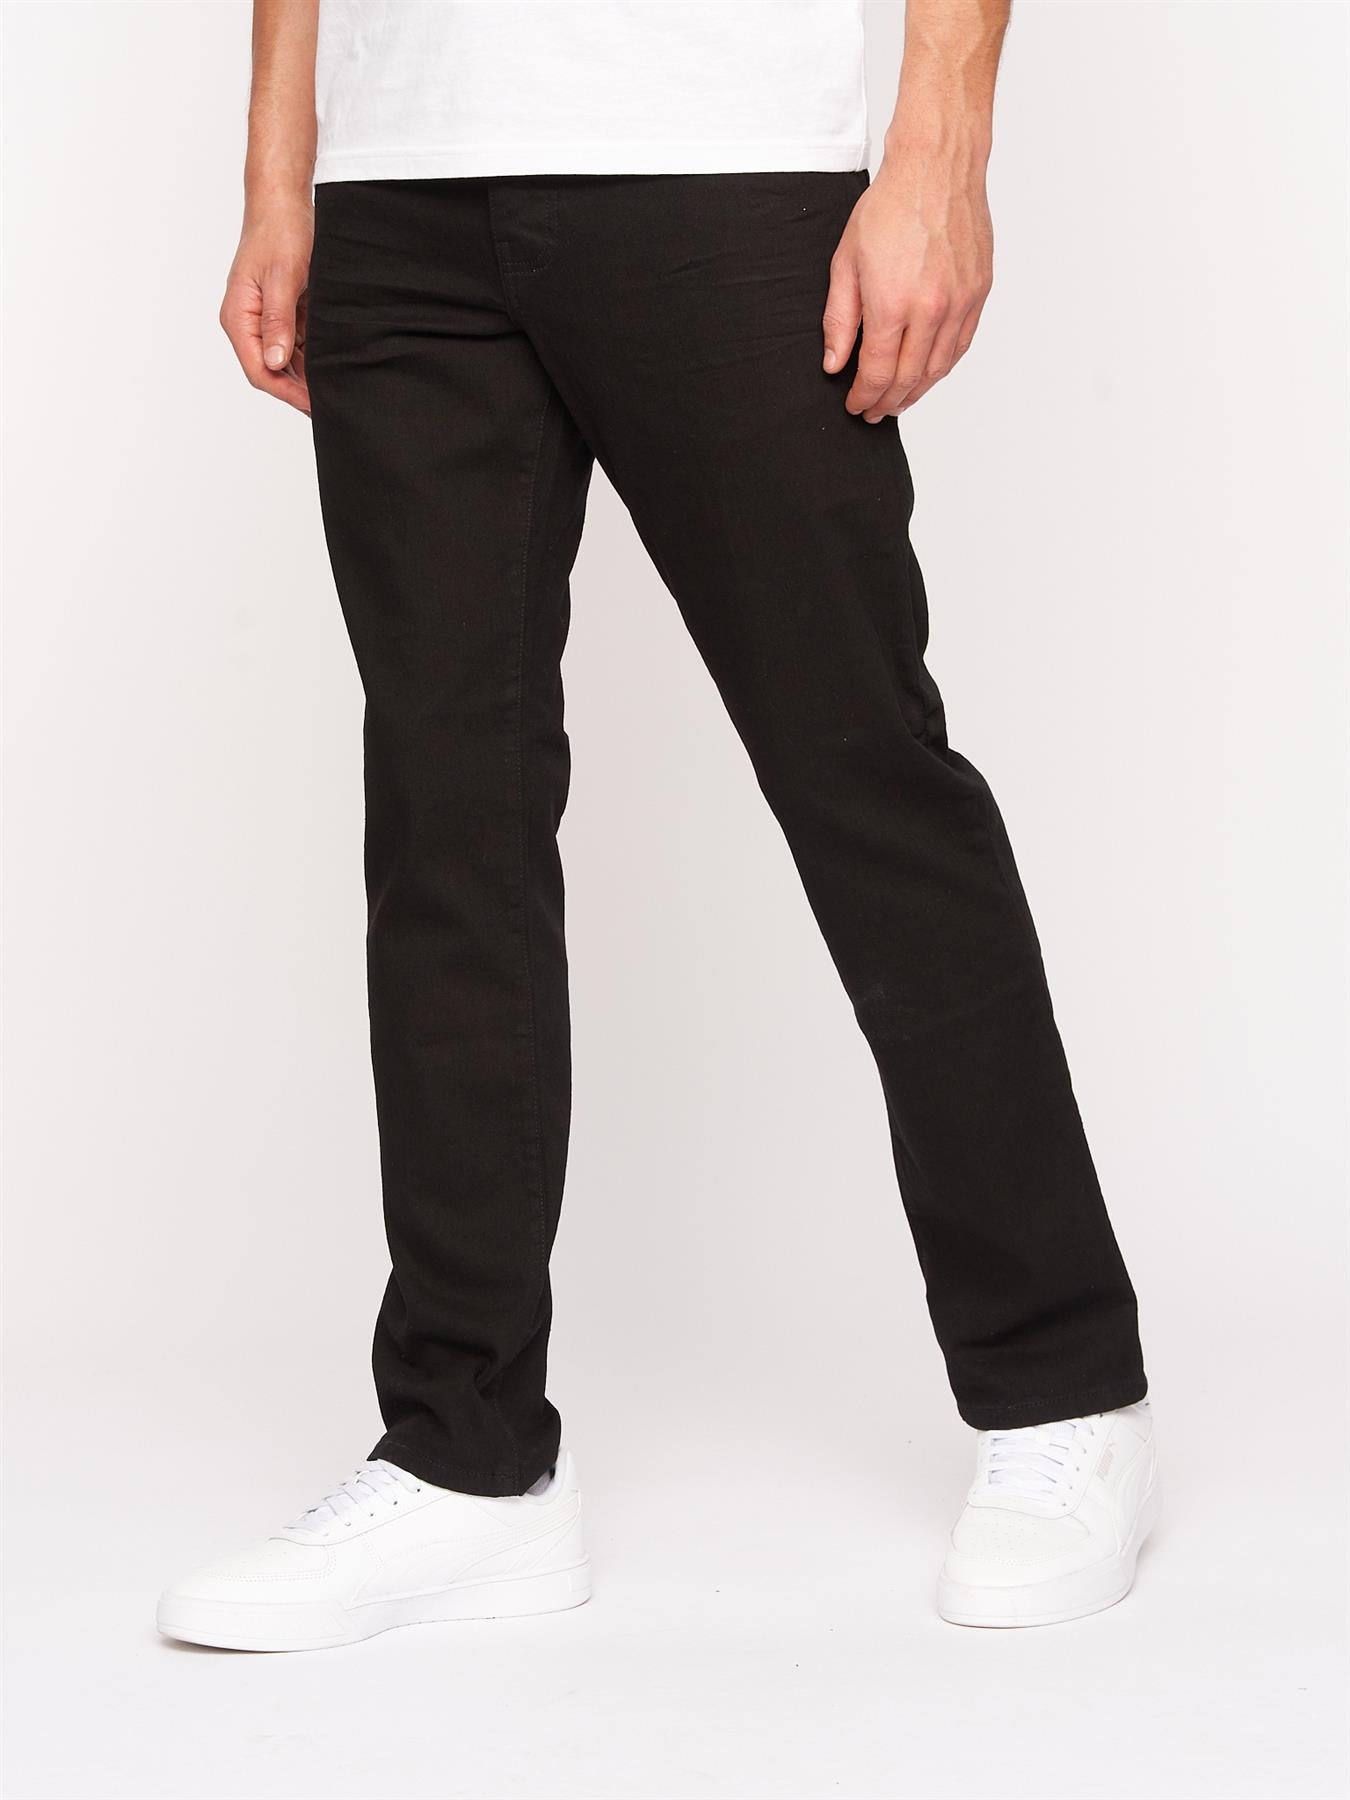 Princed Denim Jeans Solid Black